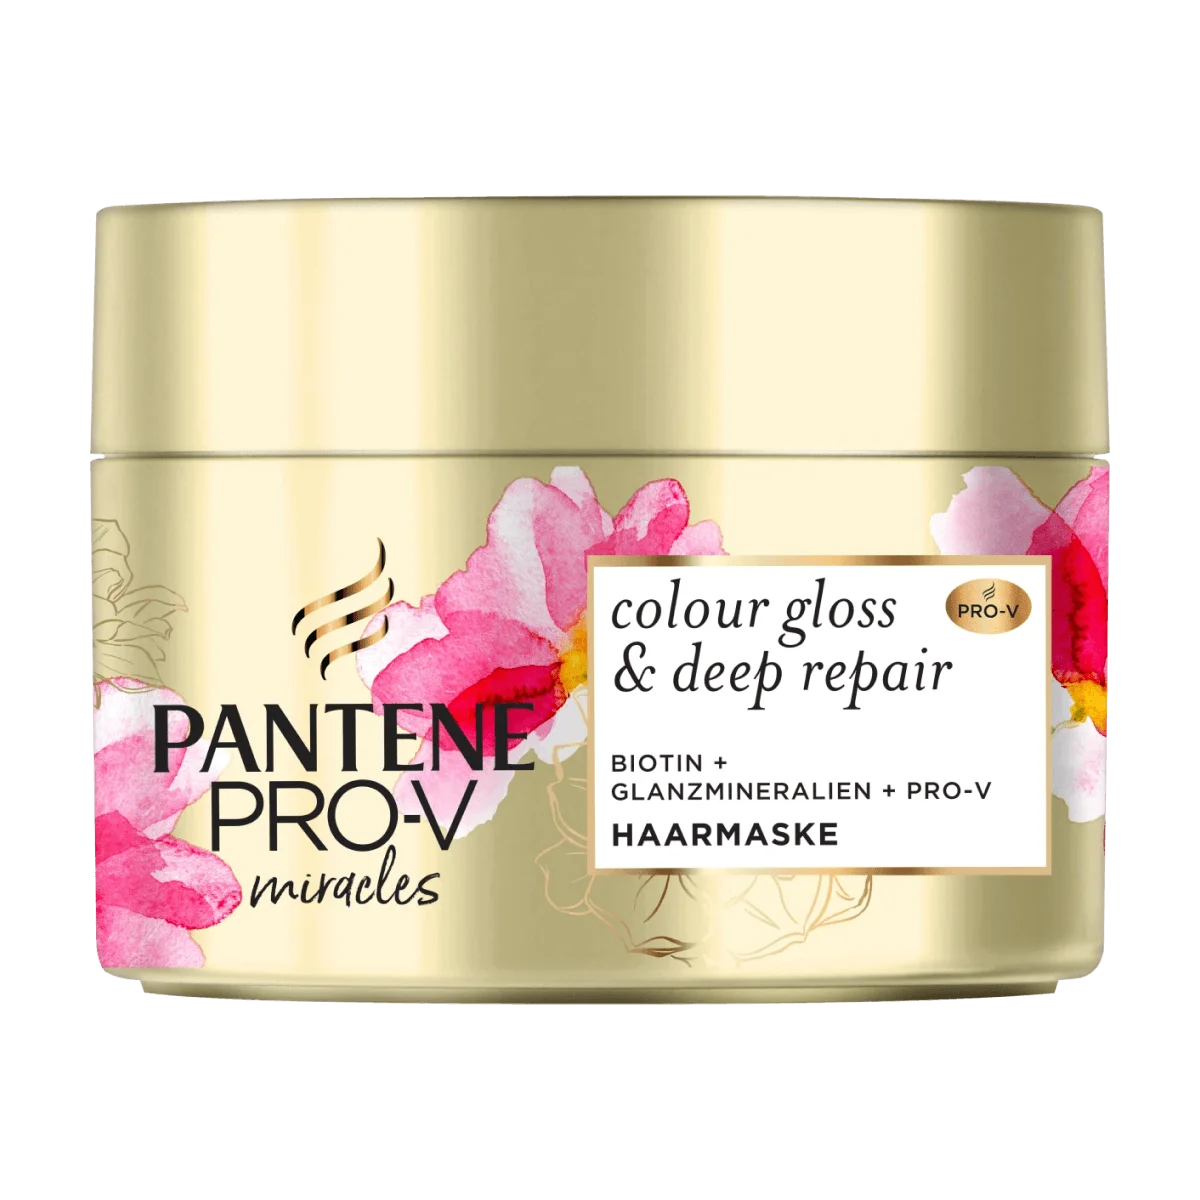 PANTENE PRO-V Haarmaske miracles colour gloss & deep repair, 300 ml